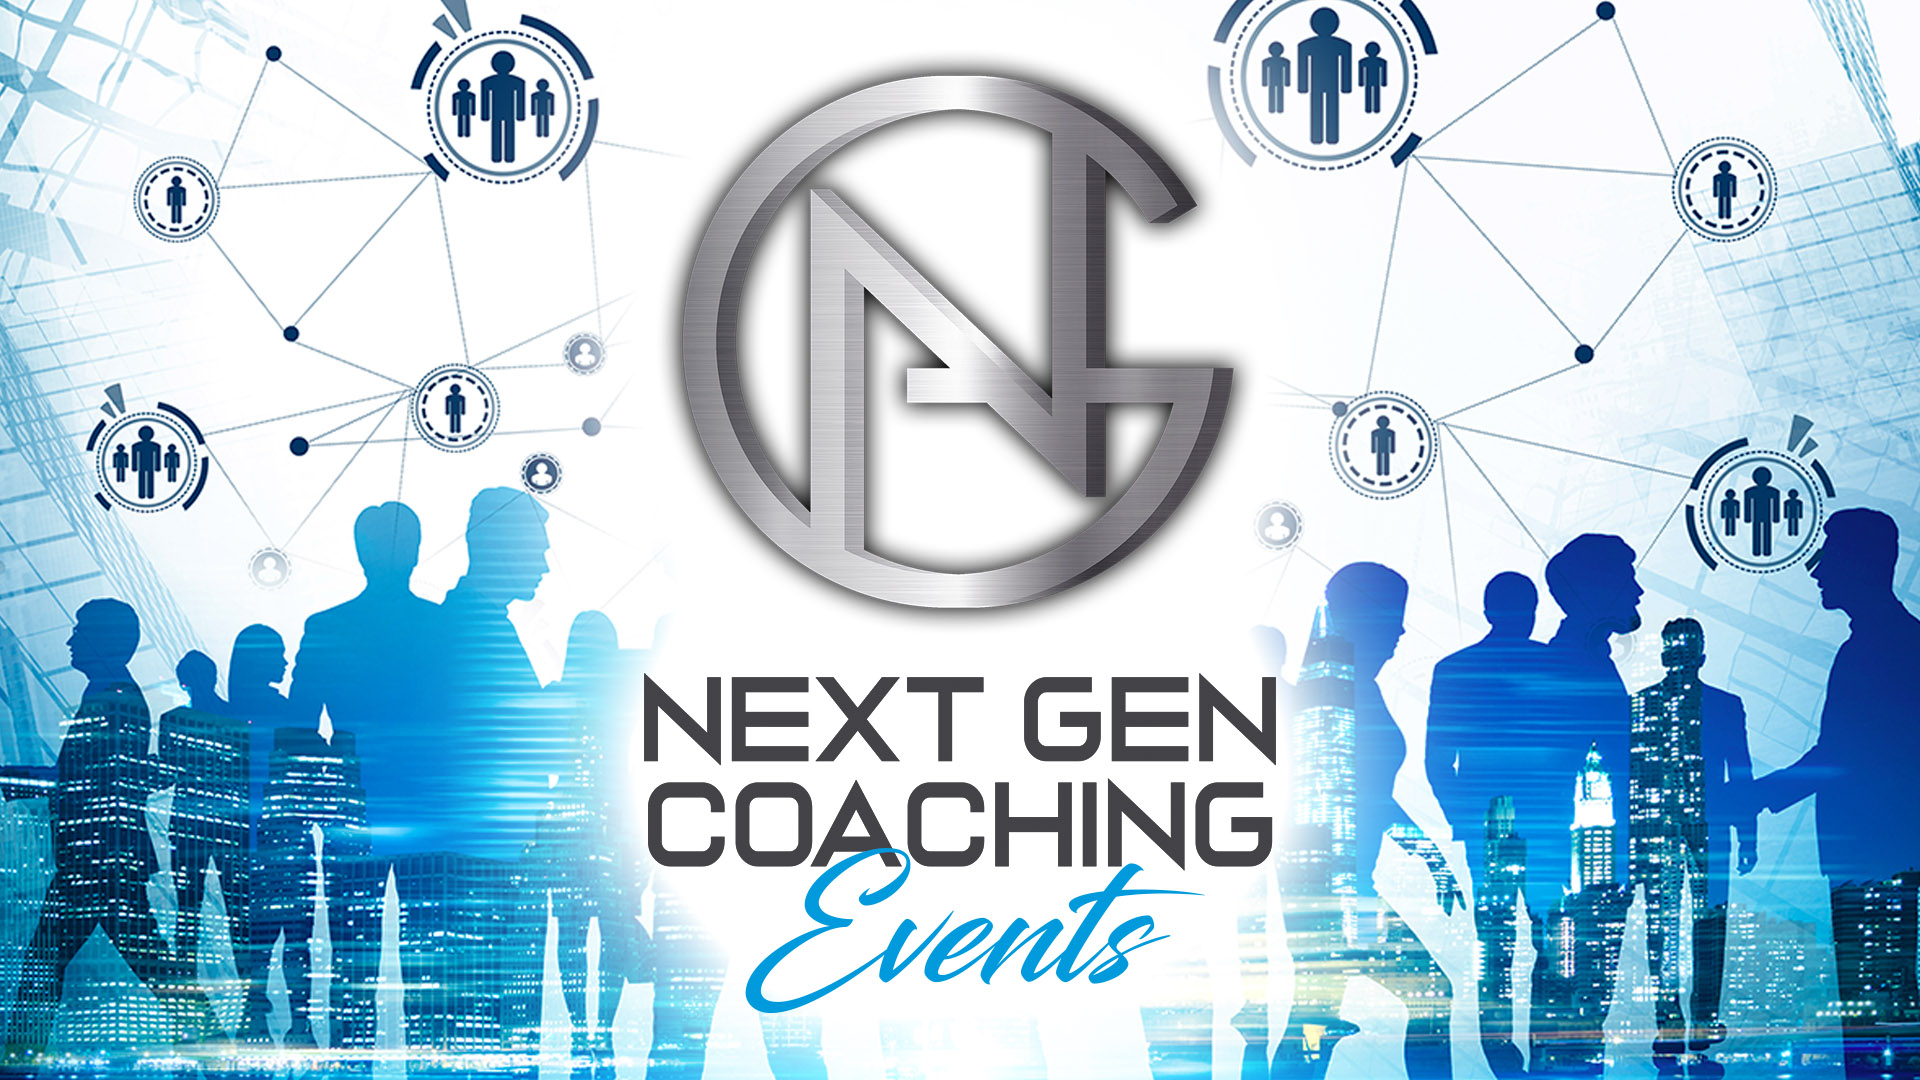 Next Gen Coaching Events